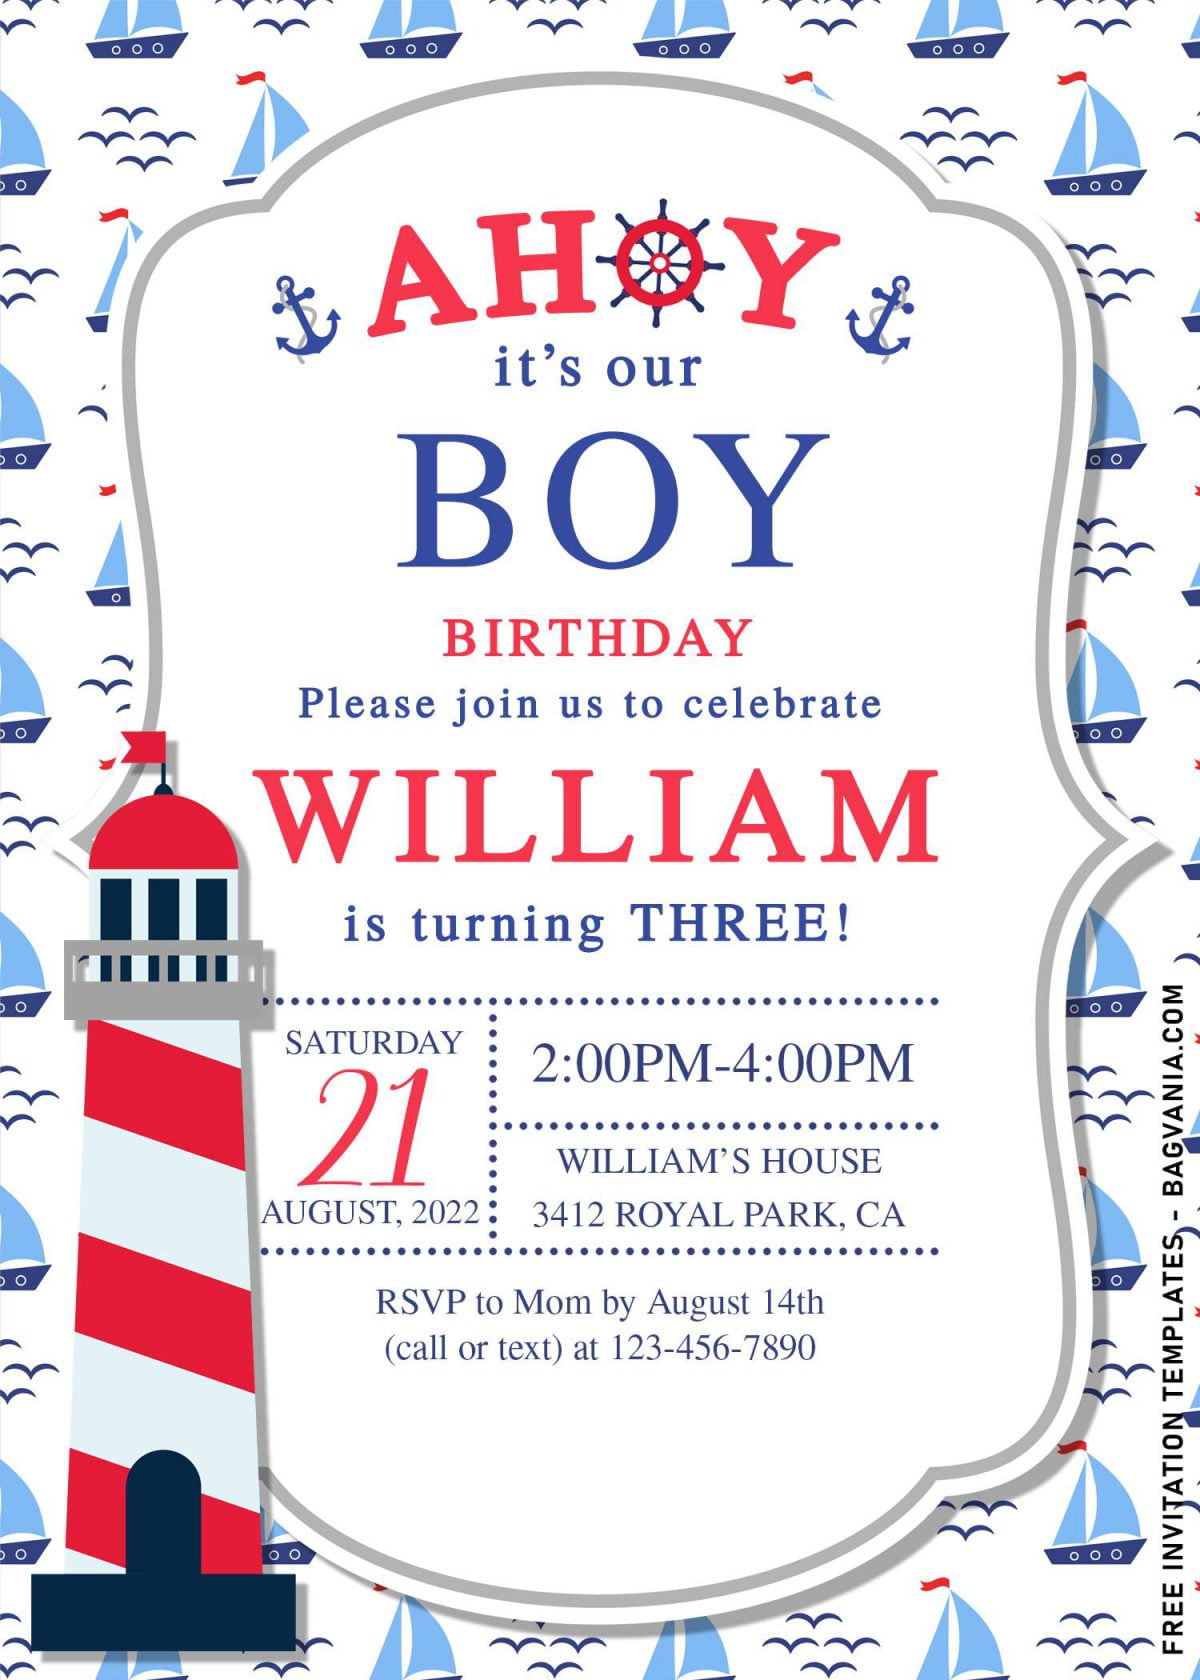 11+ Nautical Themed Birthday Invitation Templates For Your Kid’s Birthday Bash